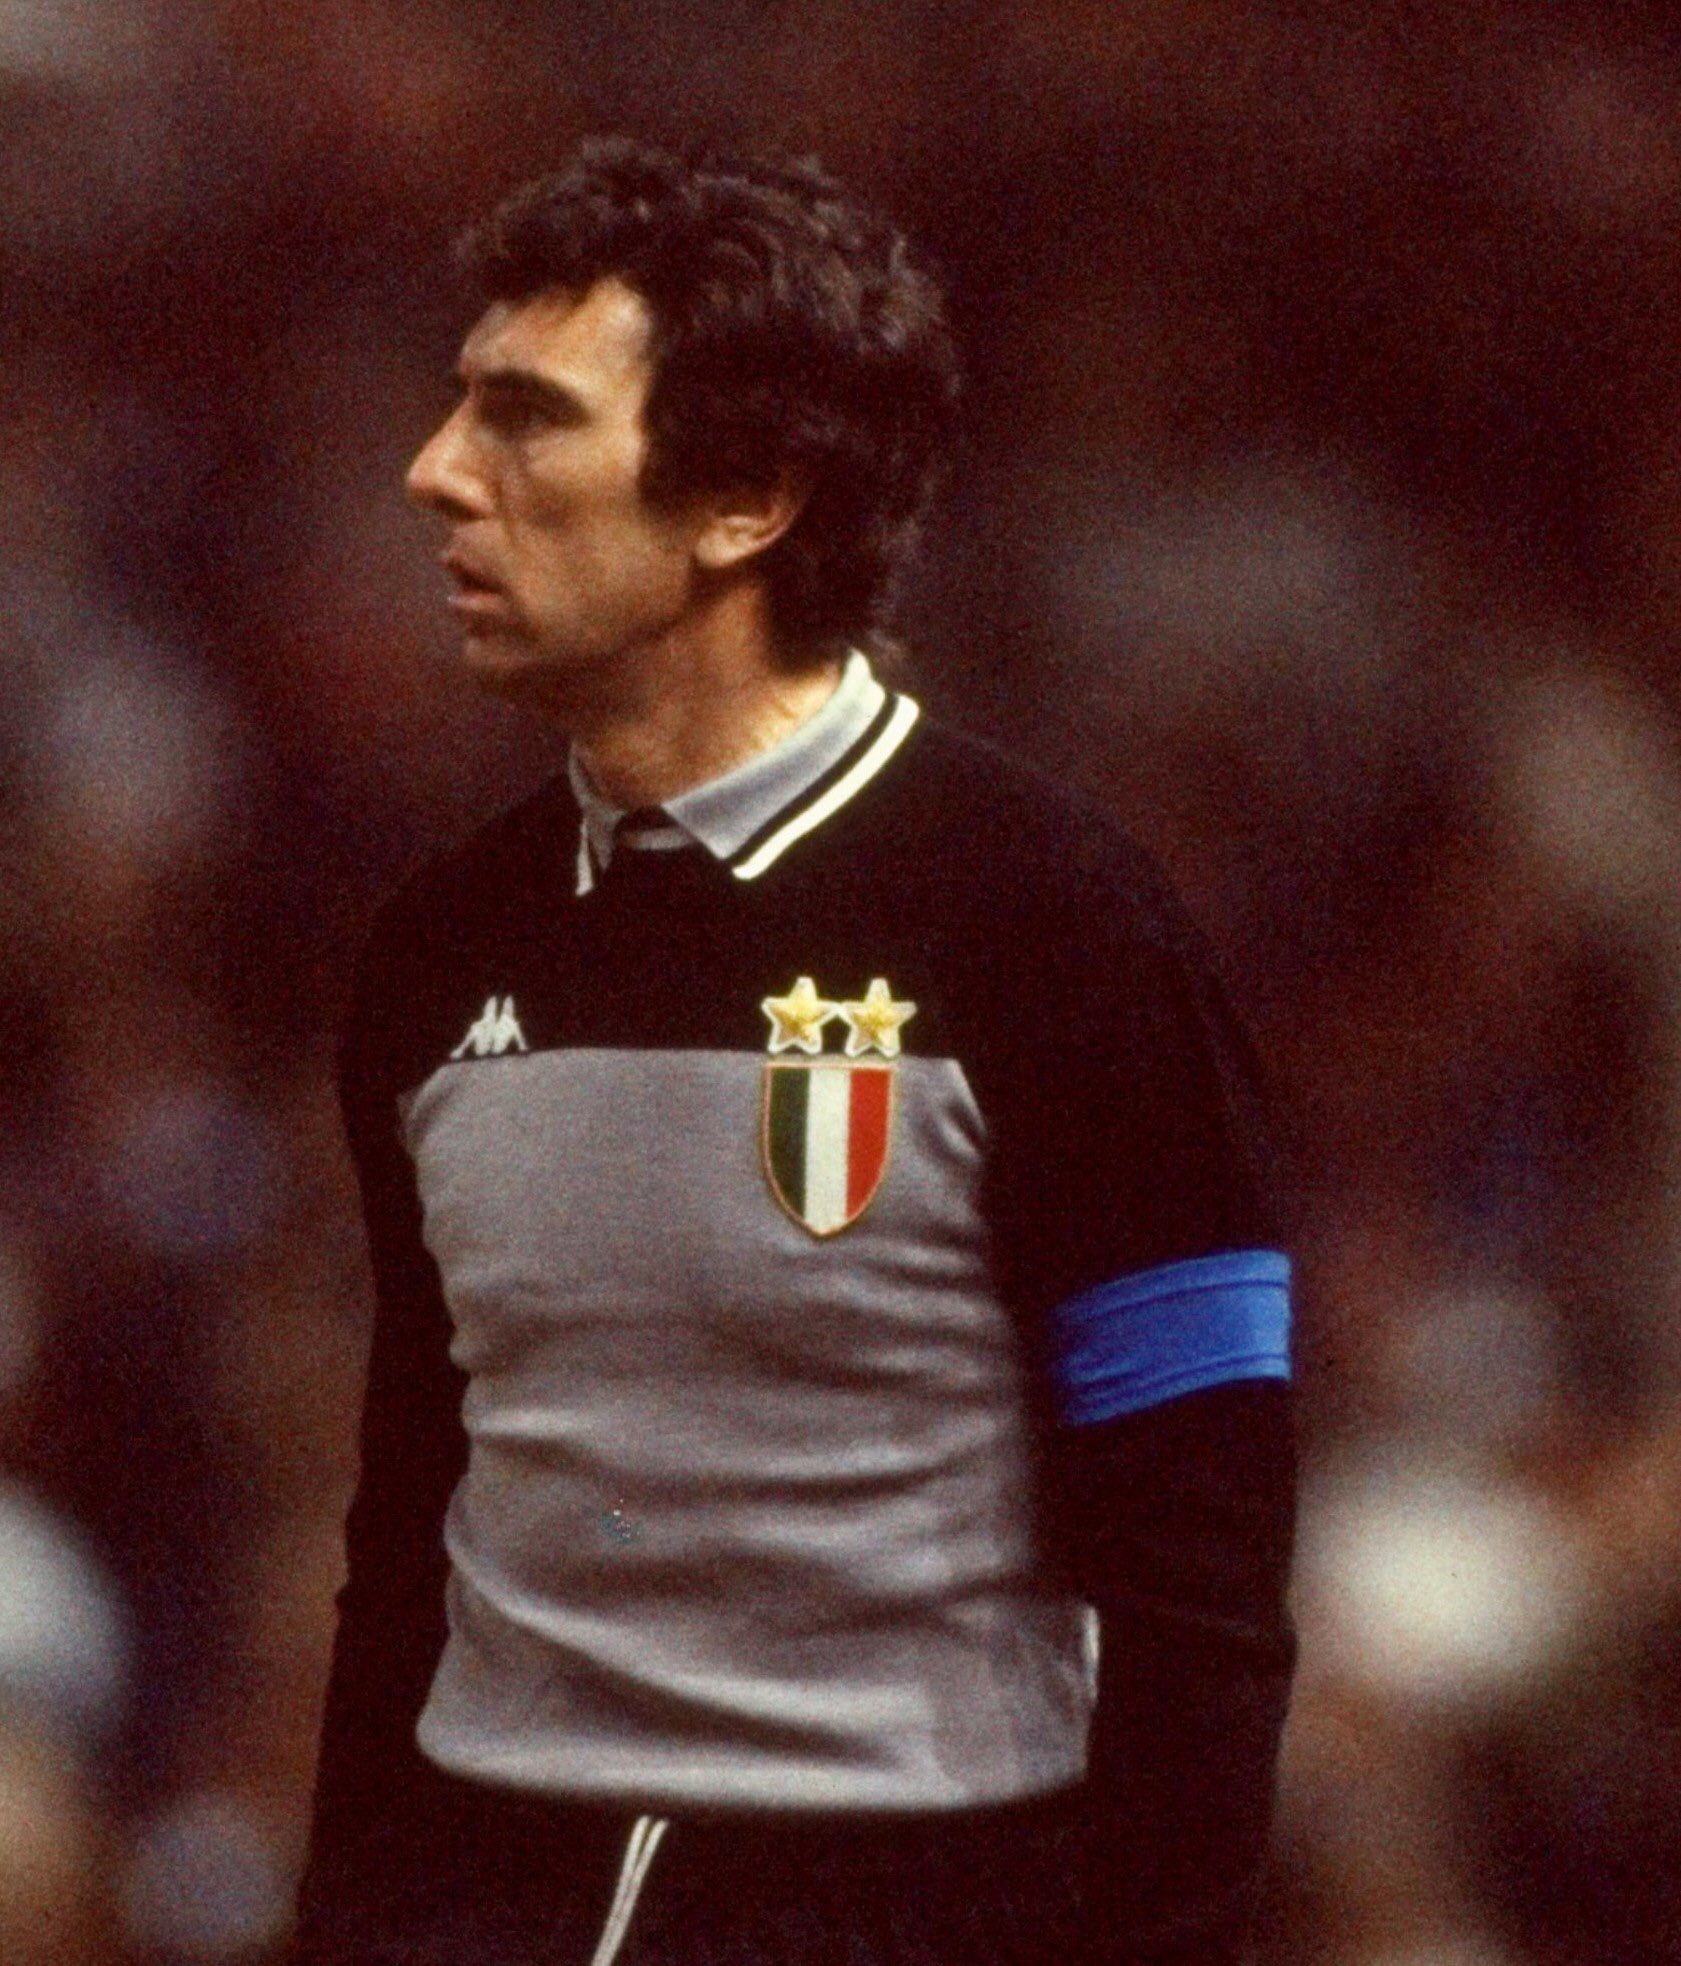 Happy birthday to Juventus legend Dino Zoff, who turns 75 today.

Games: 479 